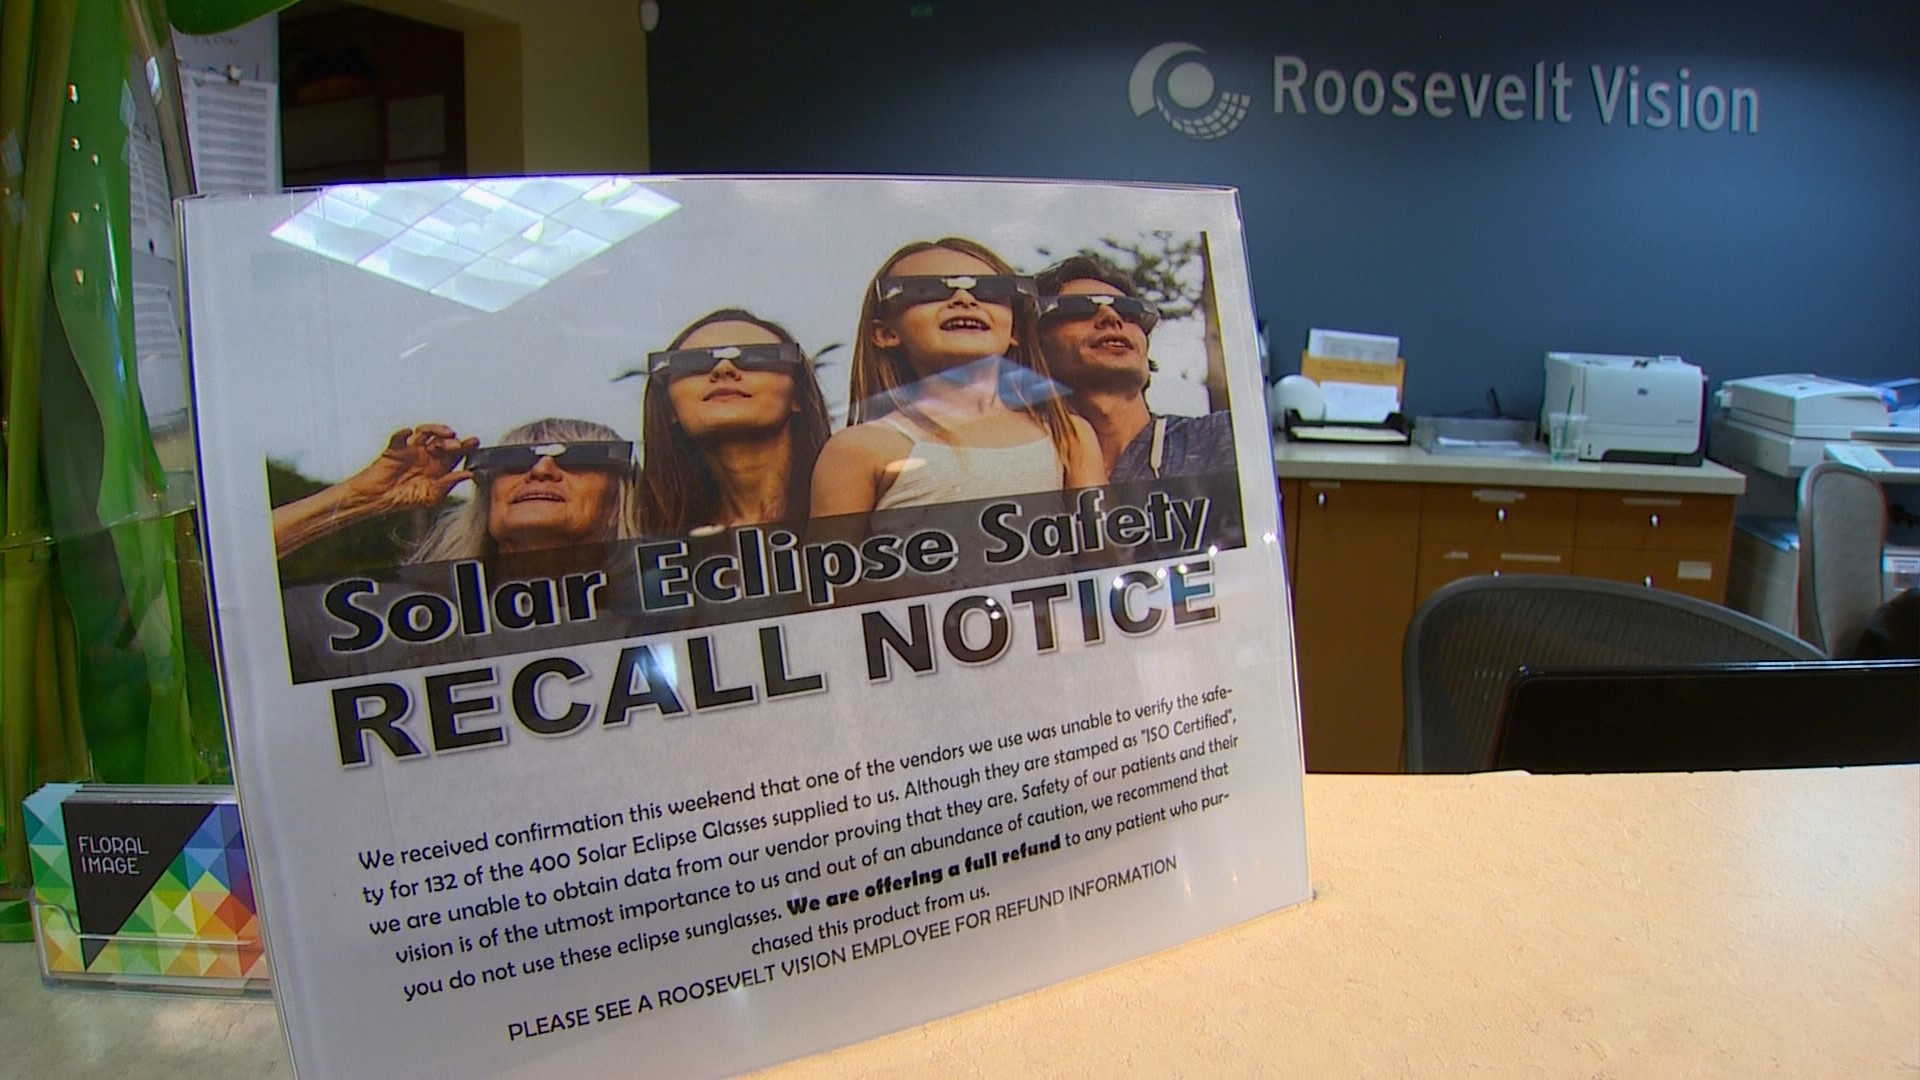 Seattle eye doctor's office recalls solar eclipse glasses